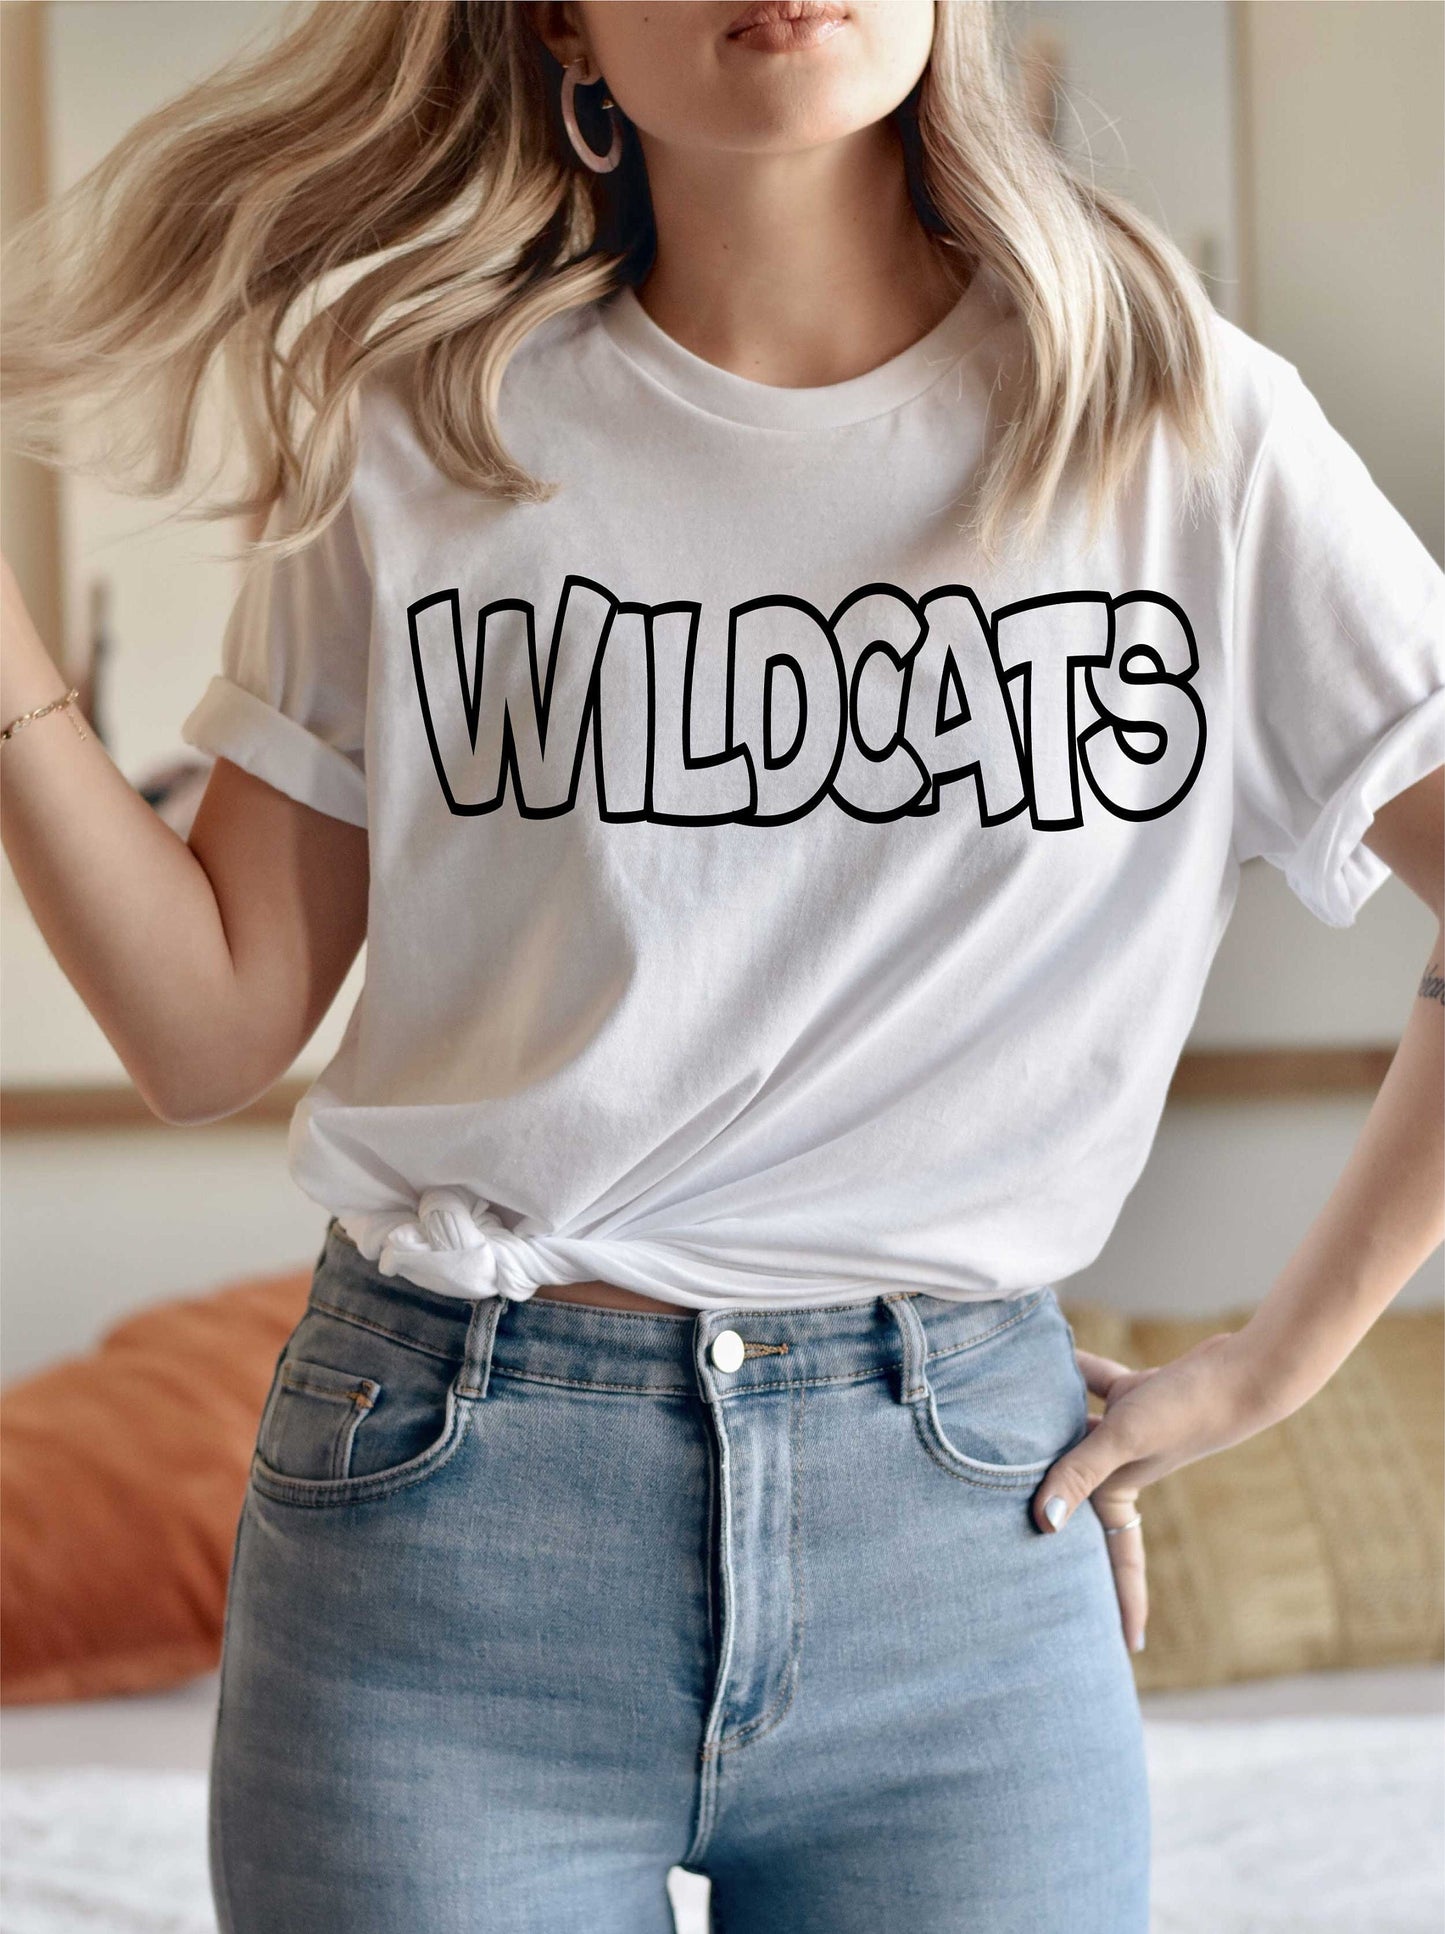 Wildcats svg, Wildcats Outline svg, Wildcats shirt svg, Digital Design, Wildcats Mascot